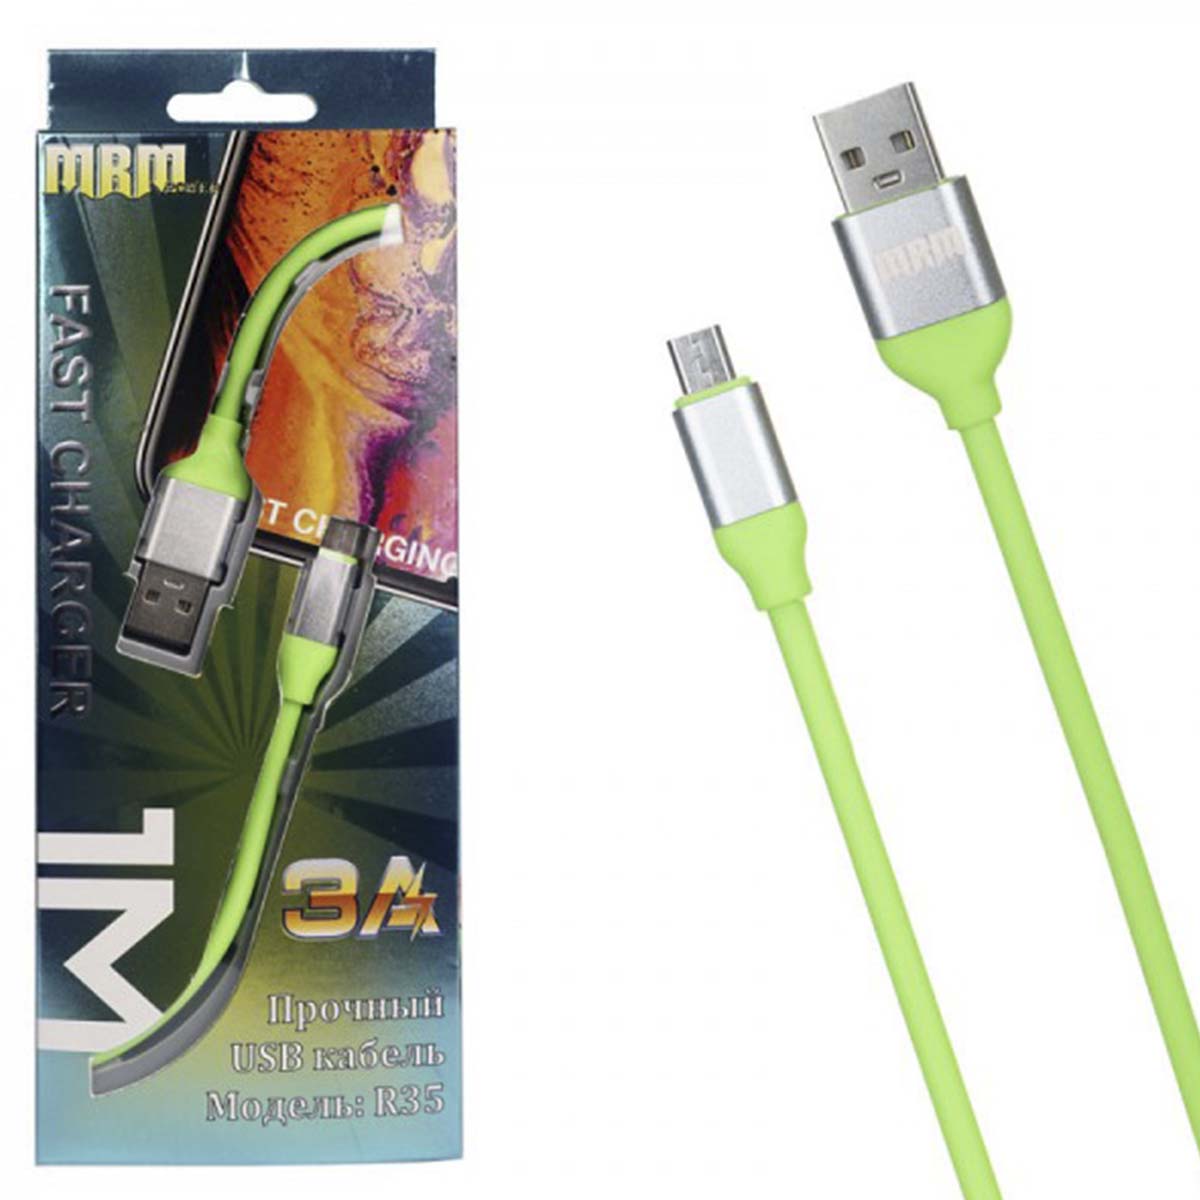 Кабель Micro USB MRM R35, силикон, 3А, длина 1 метр, цвет зеленый